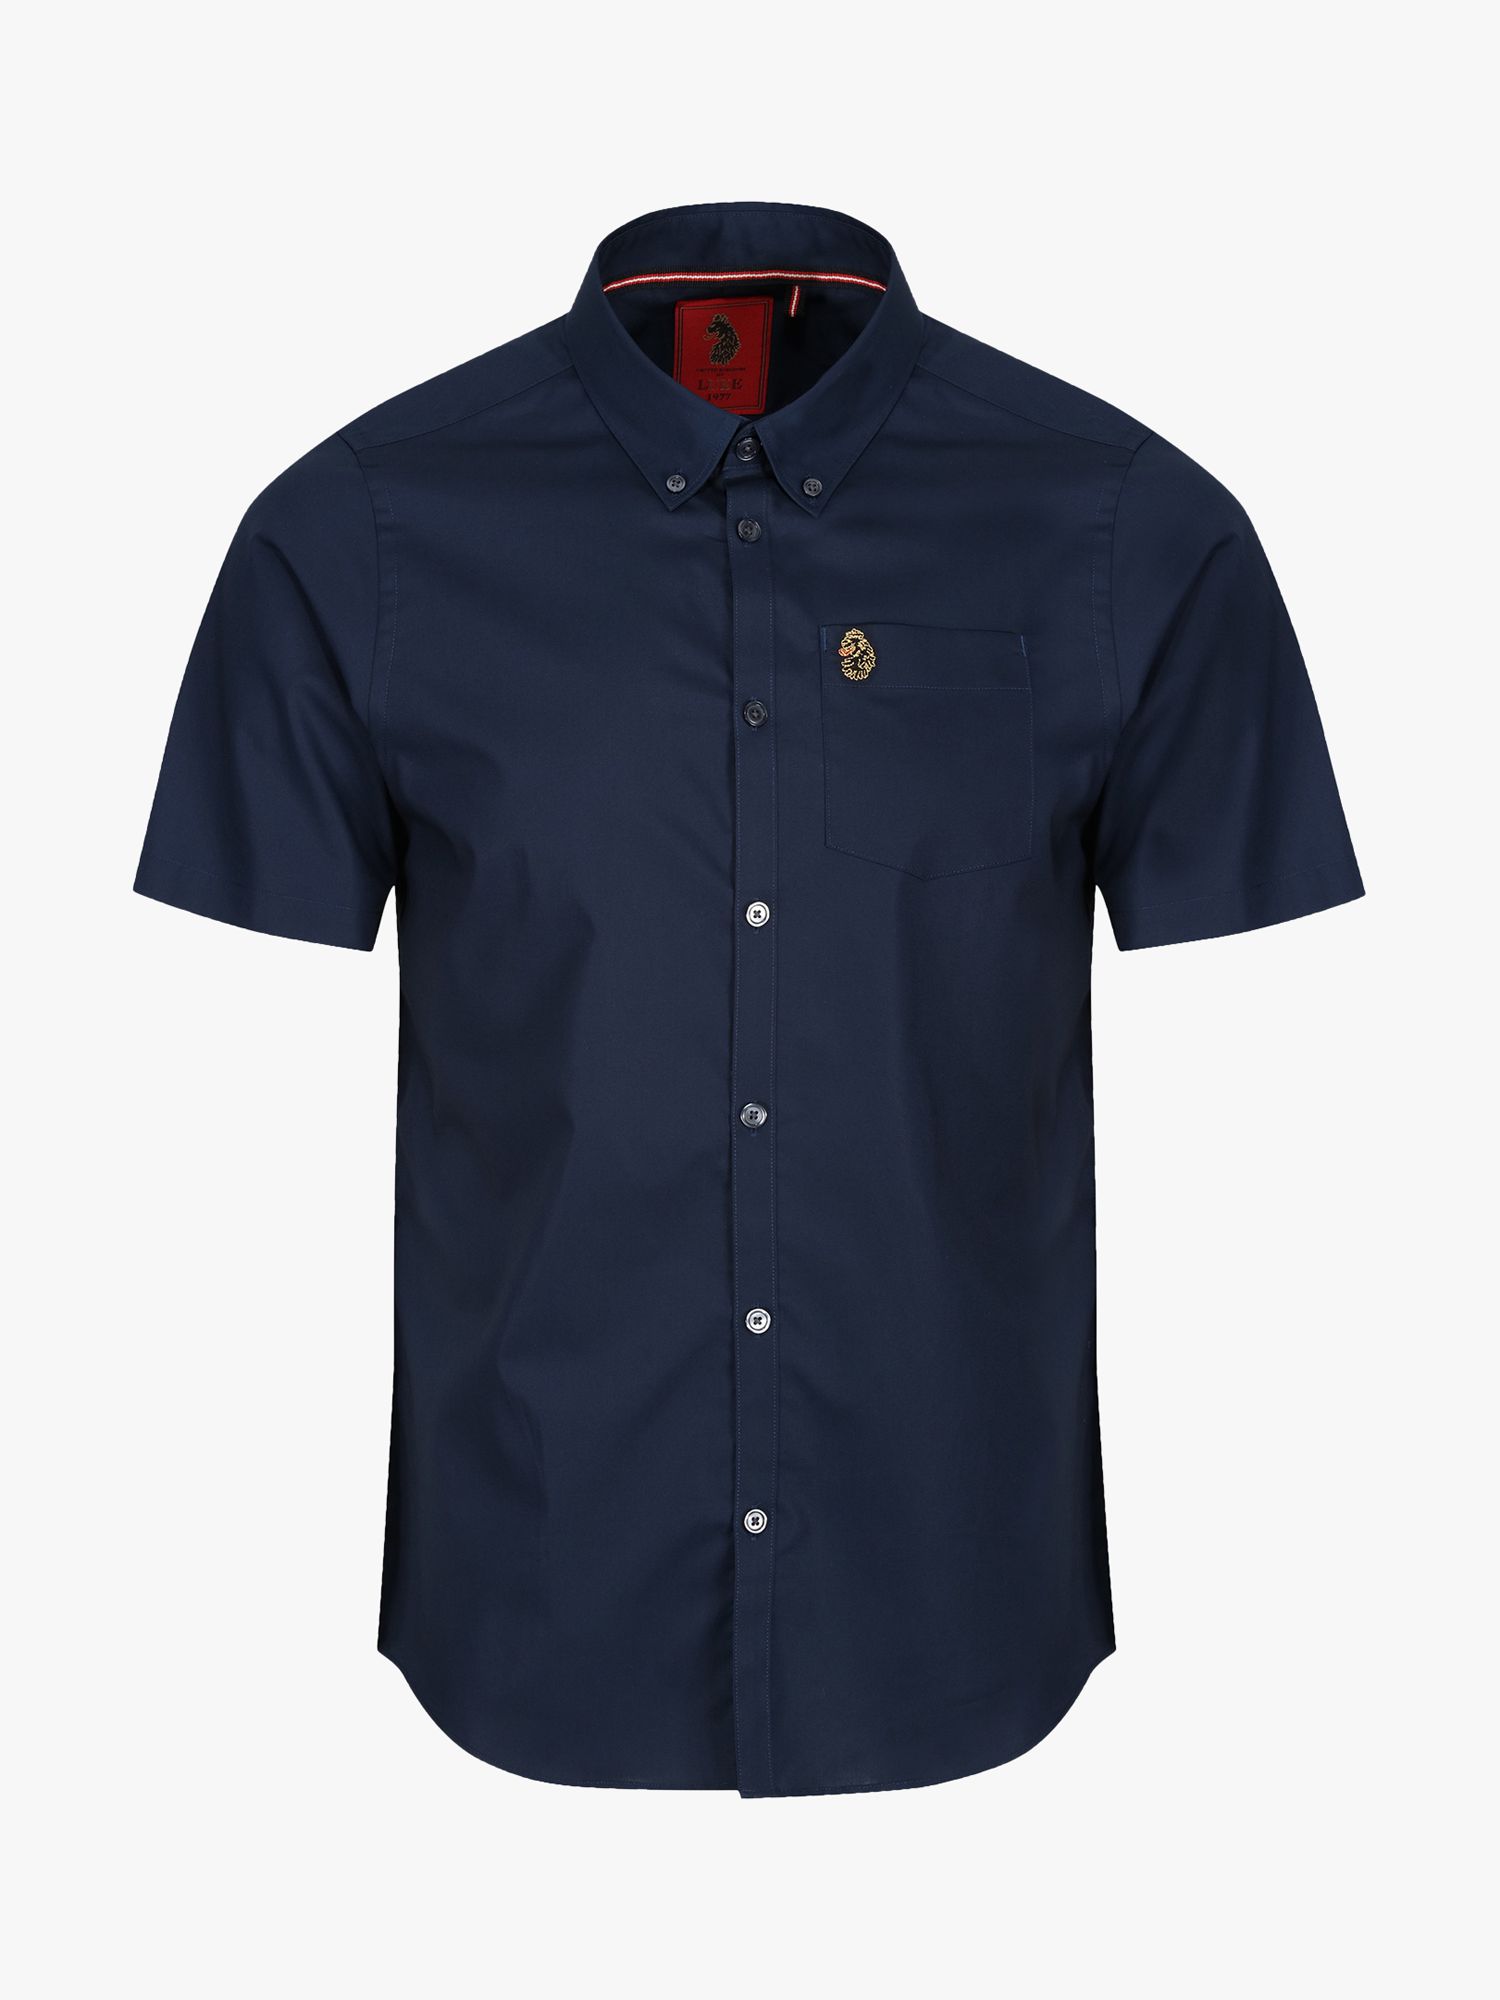 LUKE 1977 Ironbridge Short Sleeve Shirt, Navy, XXXL